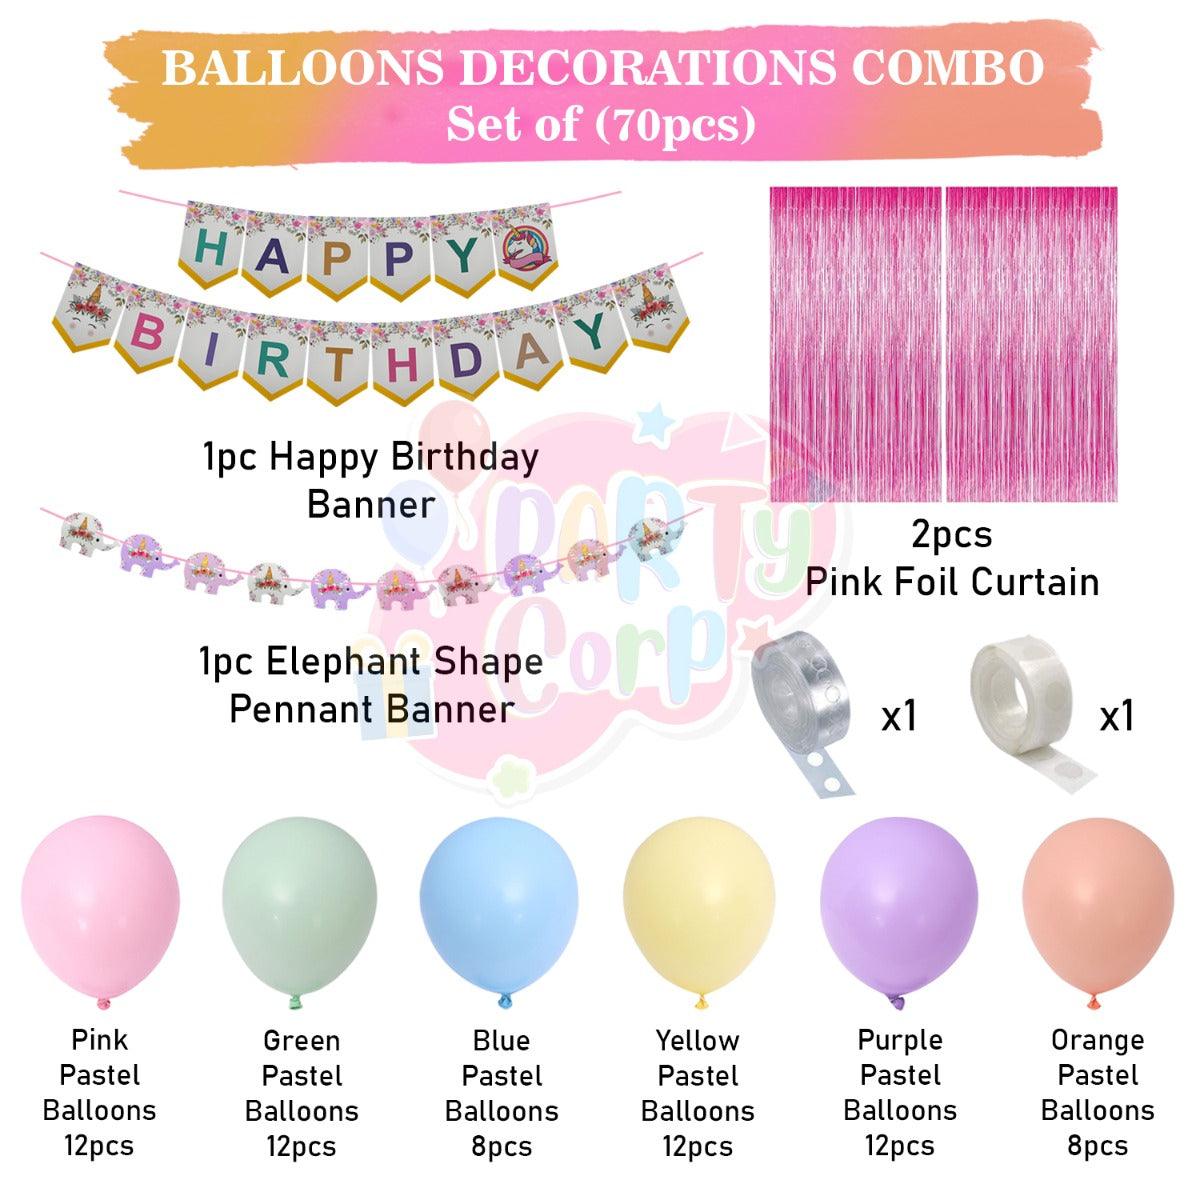 PartyCorp Happy Birthday Decoration Kit Combo 70 Pcs - Pink, Green, Blue, Yellow, Purple & Orange Pastel Balloons, Happy Birthday Bannner, Elephant Pennant Banner, Pink Curtain